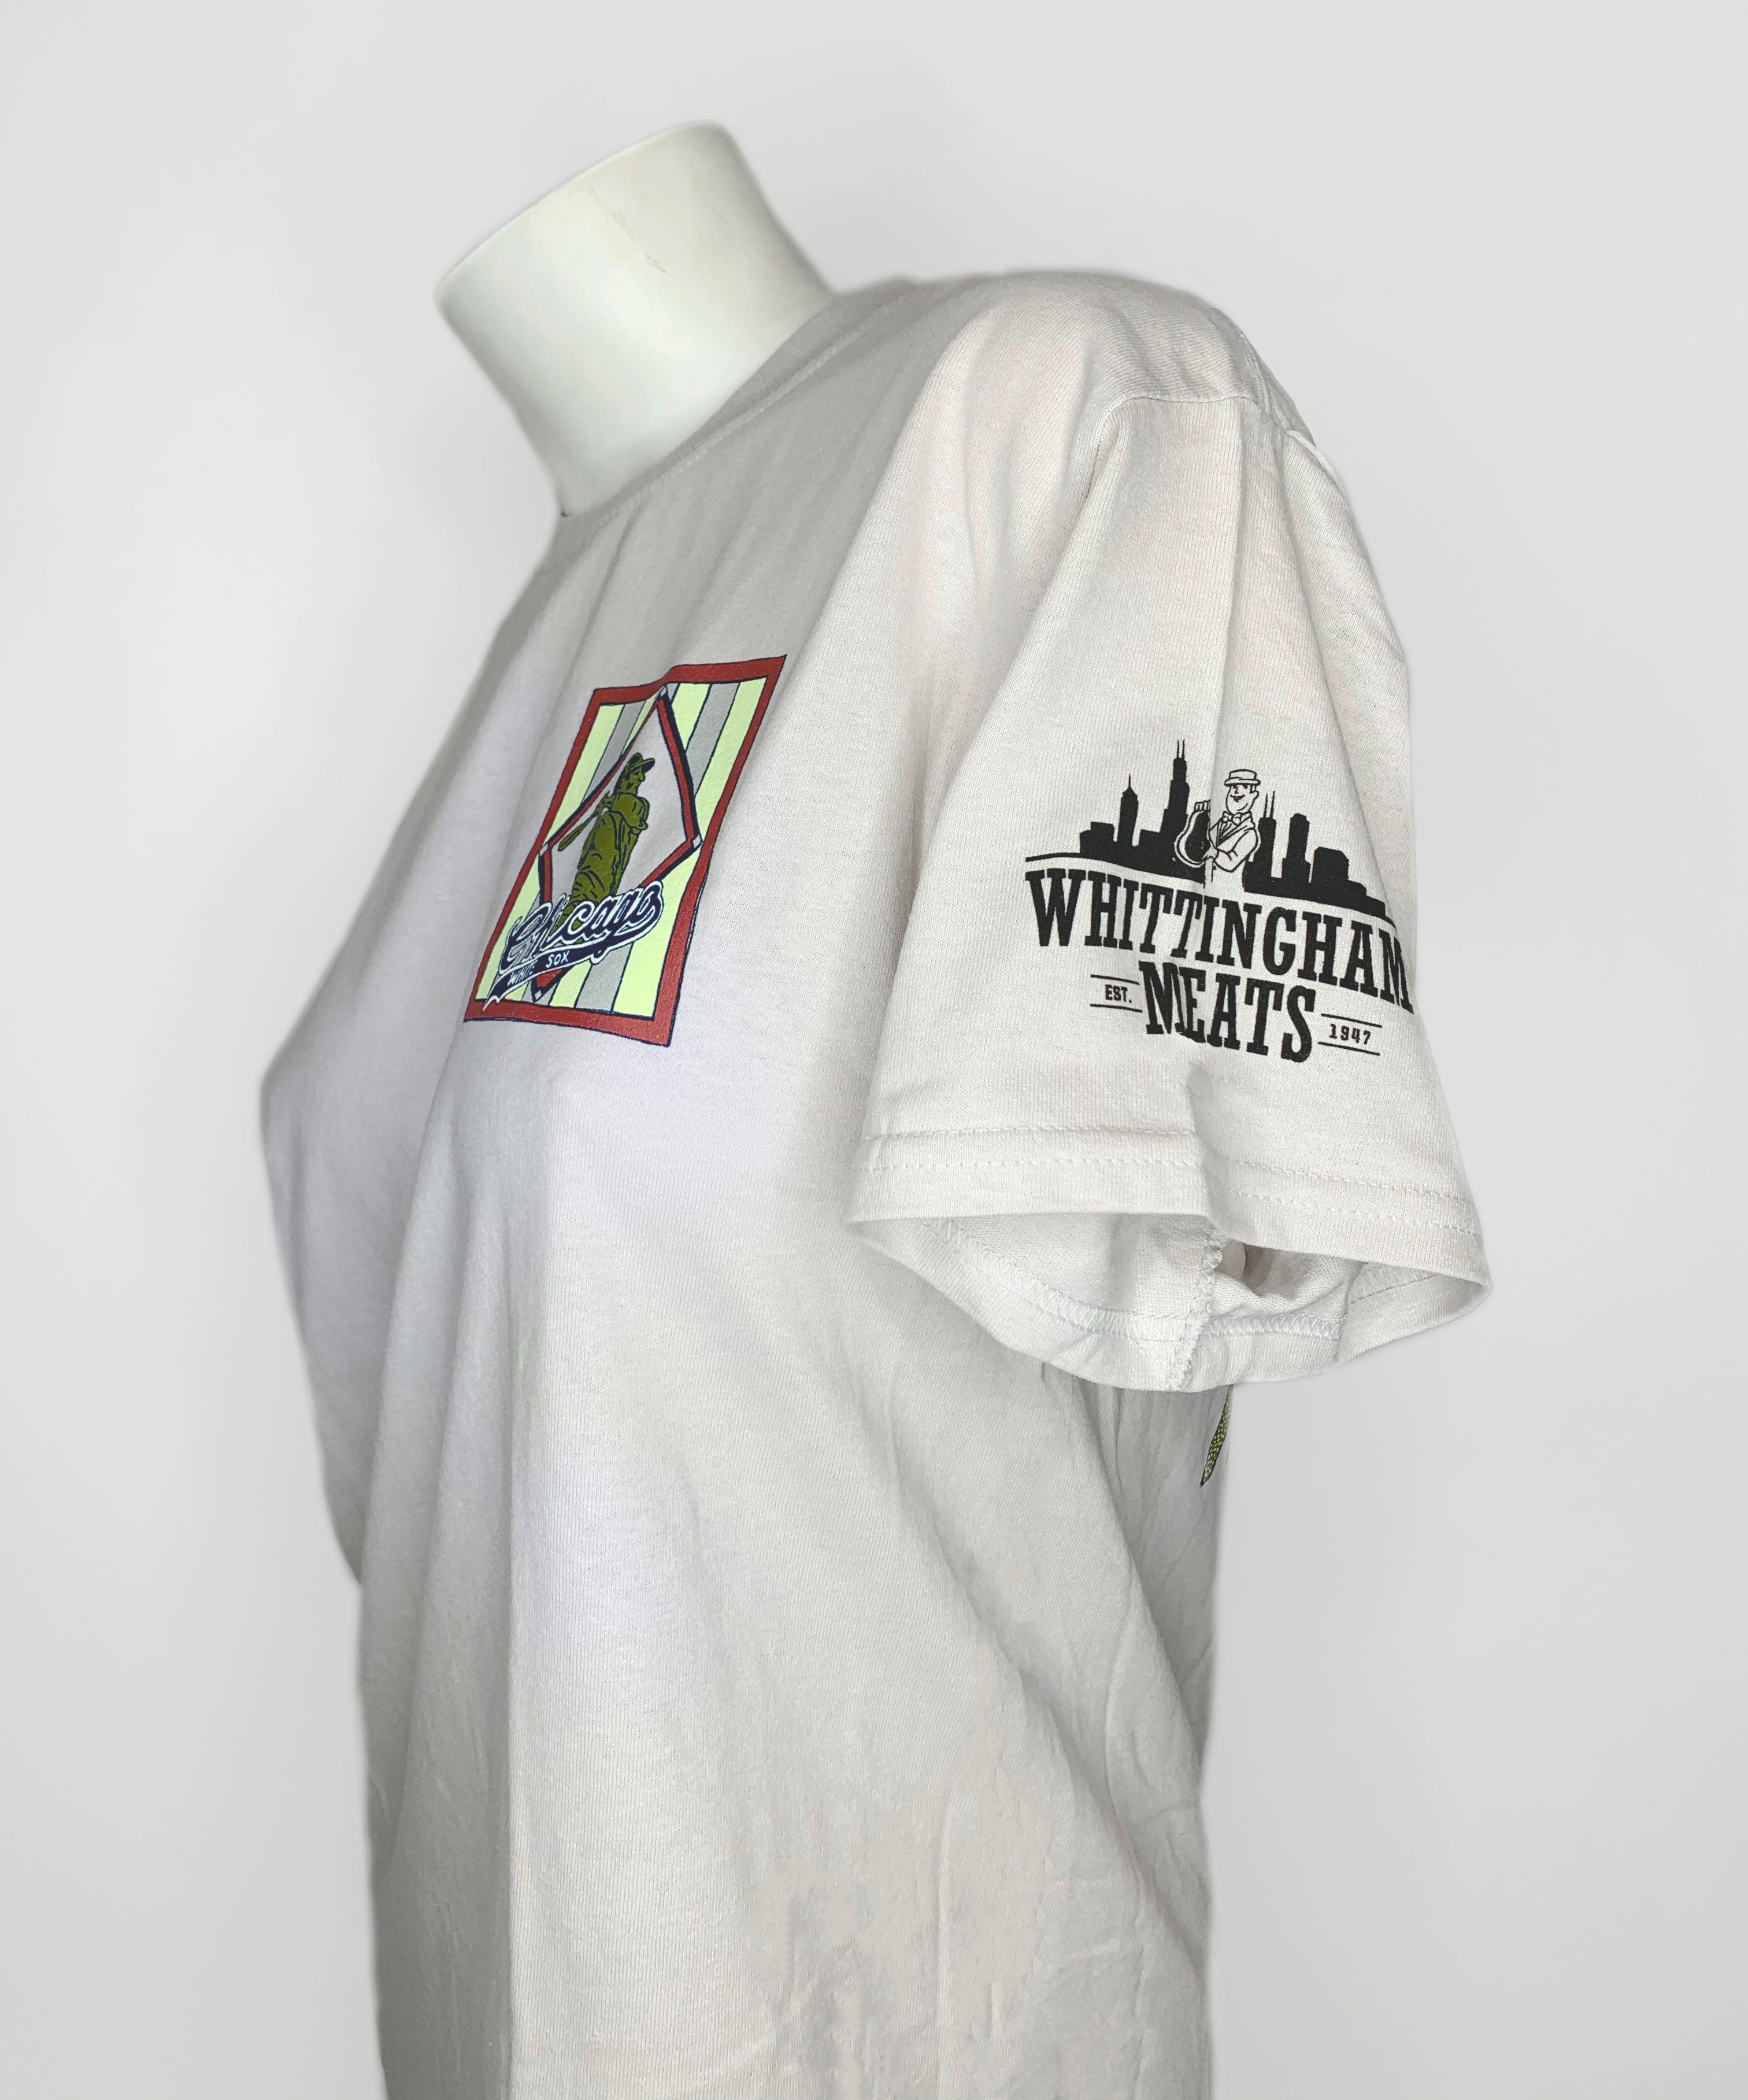 "Retro White Sox" Official White Sox T-Shirt by Zissou Tasseff-Elenkoff